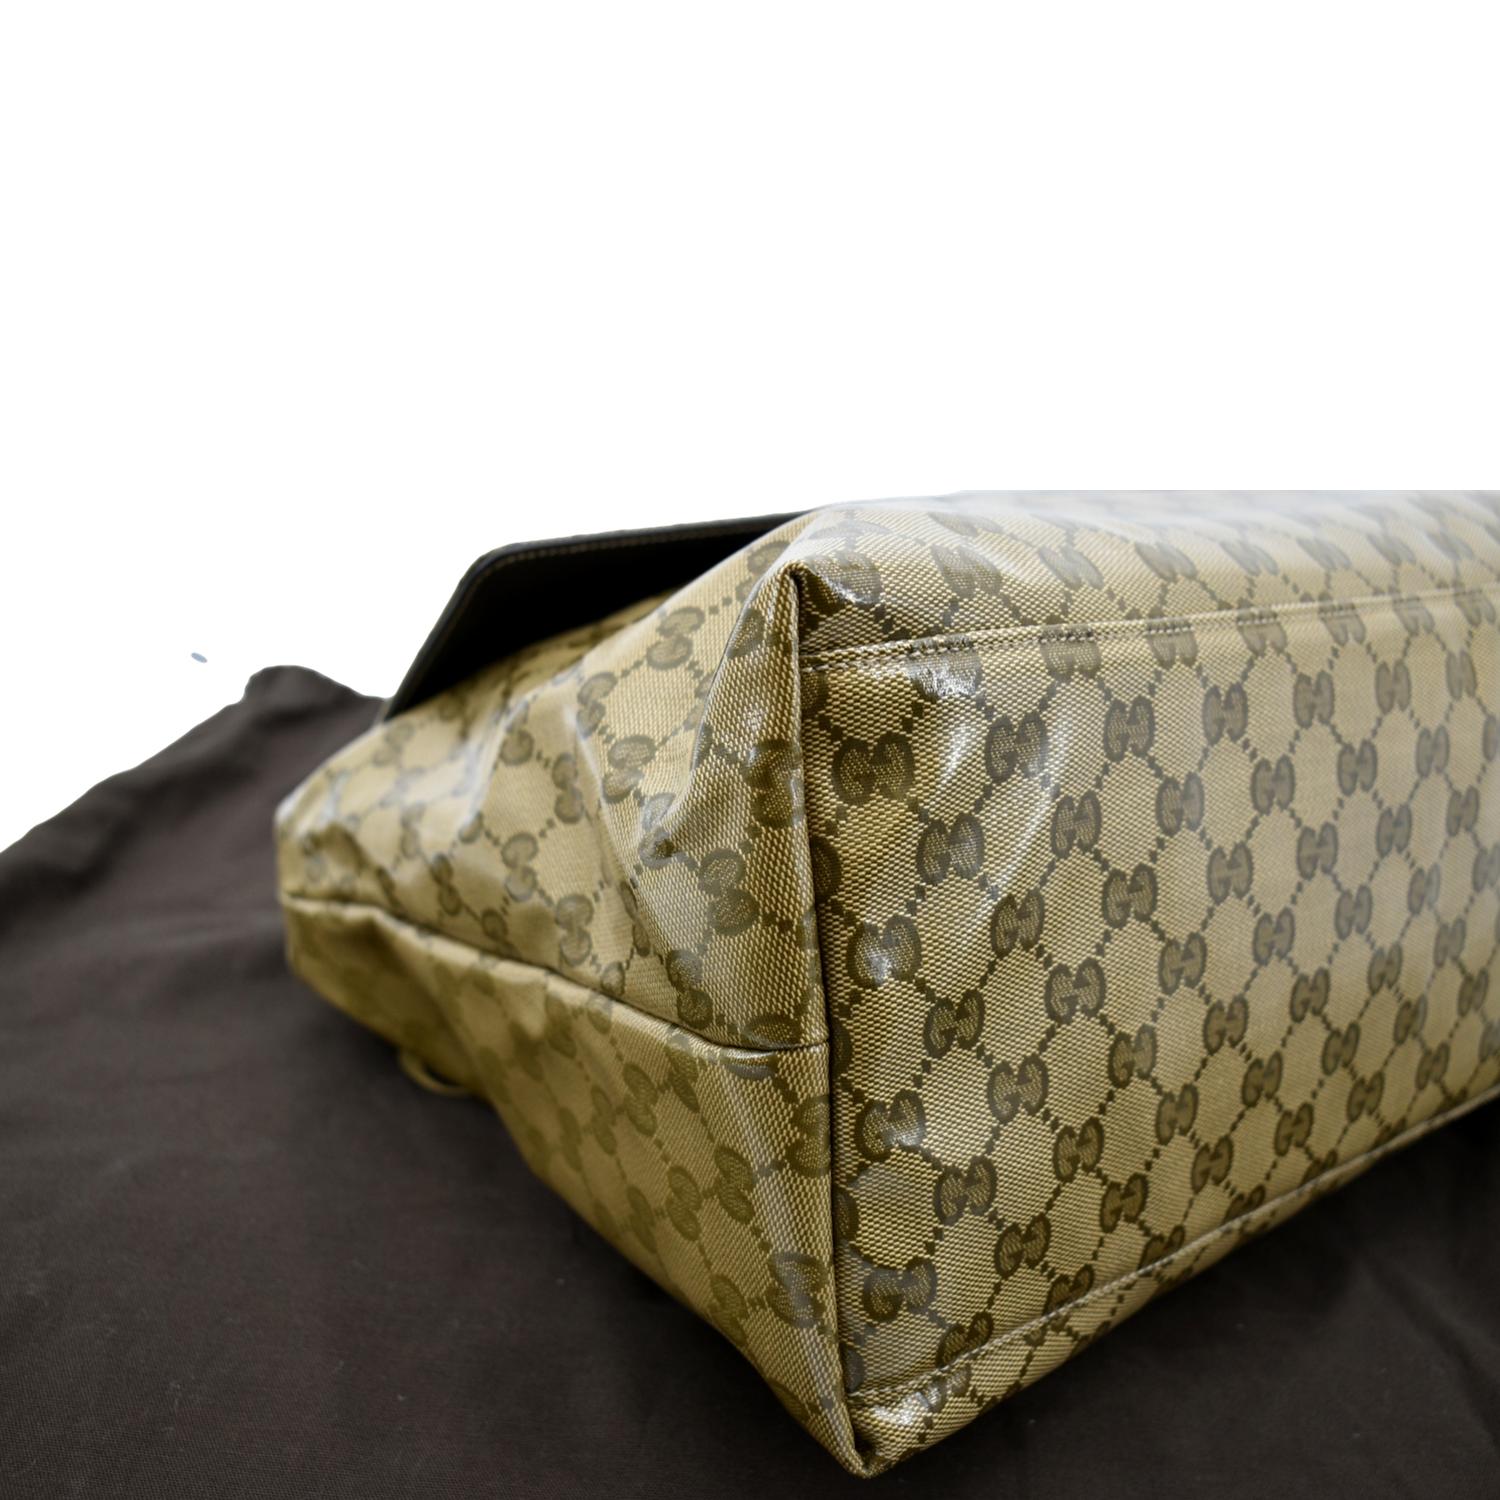 Gucci Vintage Beige GG Supreme Coated Canvas Tote Bag